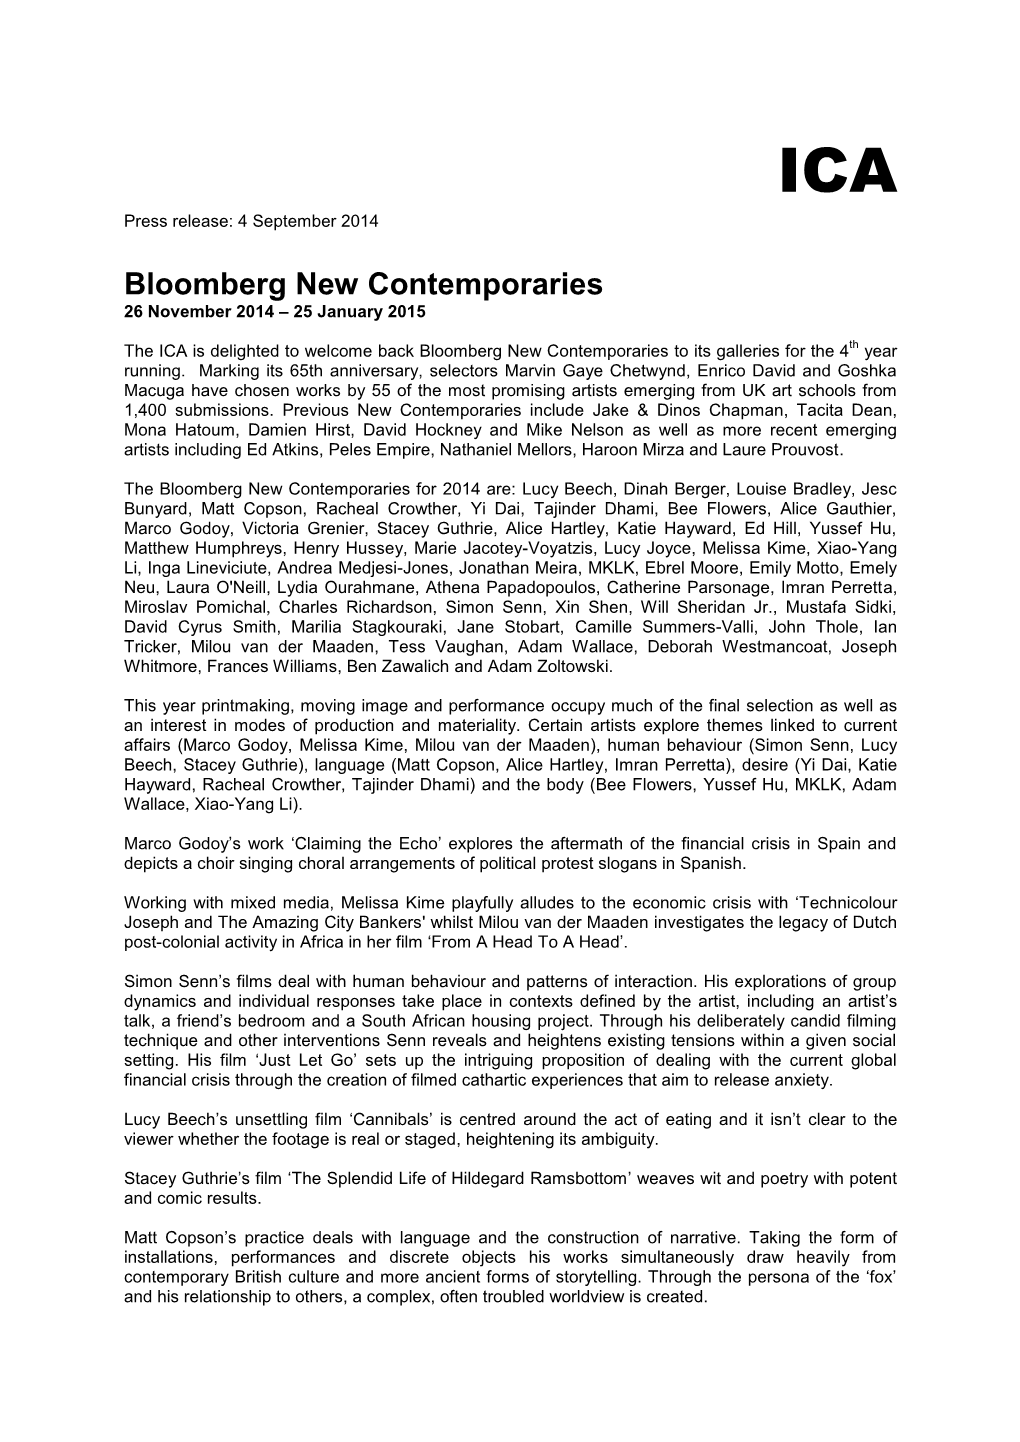 Bloomberg New Contemporaries 26 November 2014 – 25 January 2015